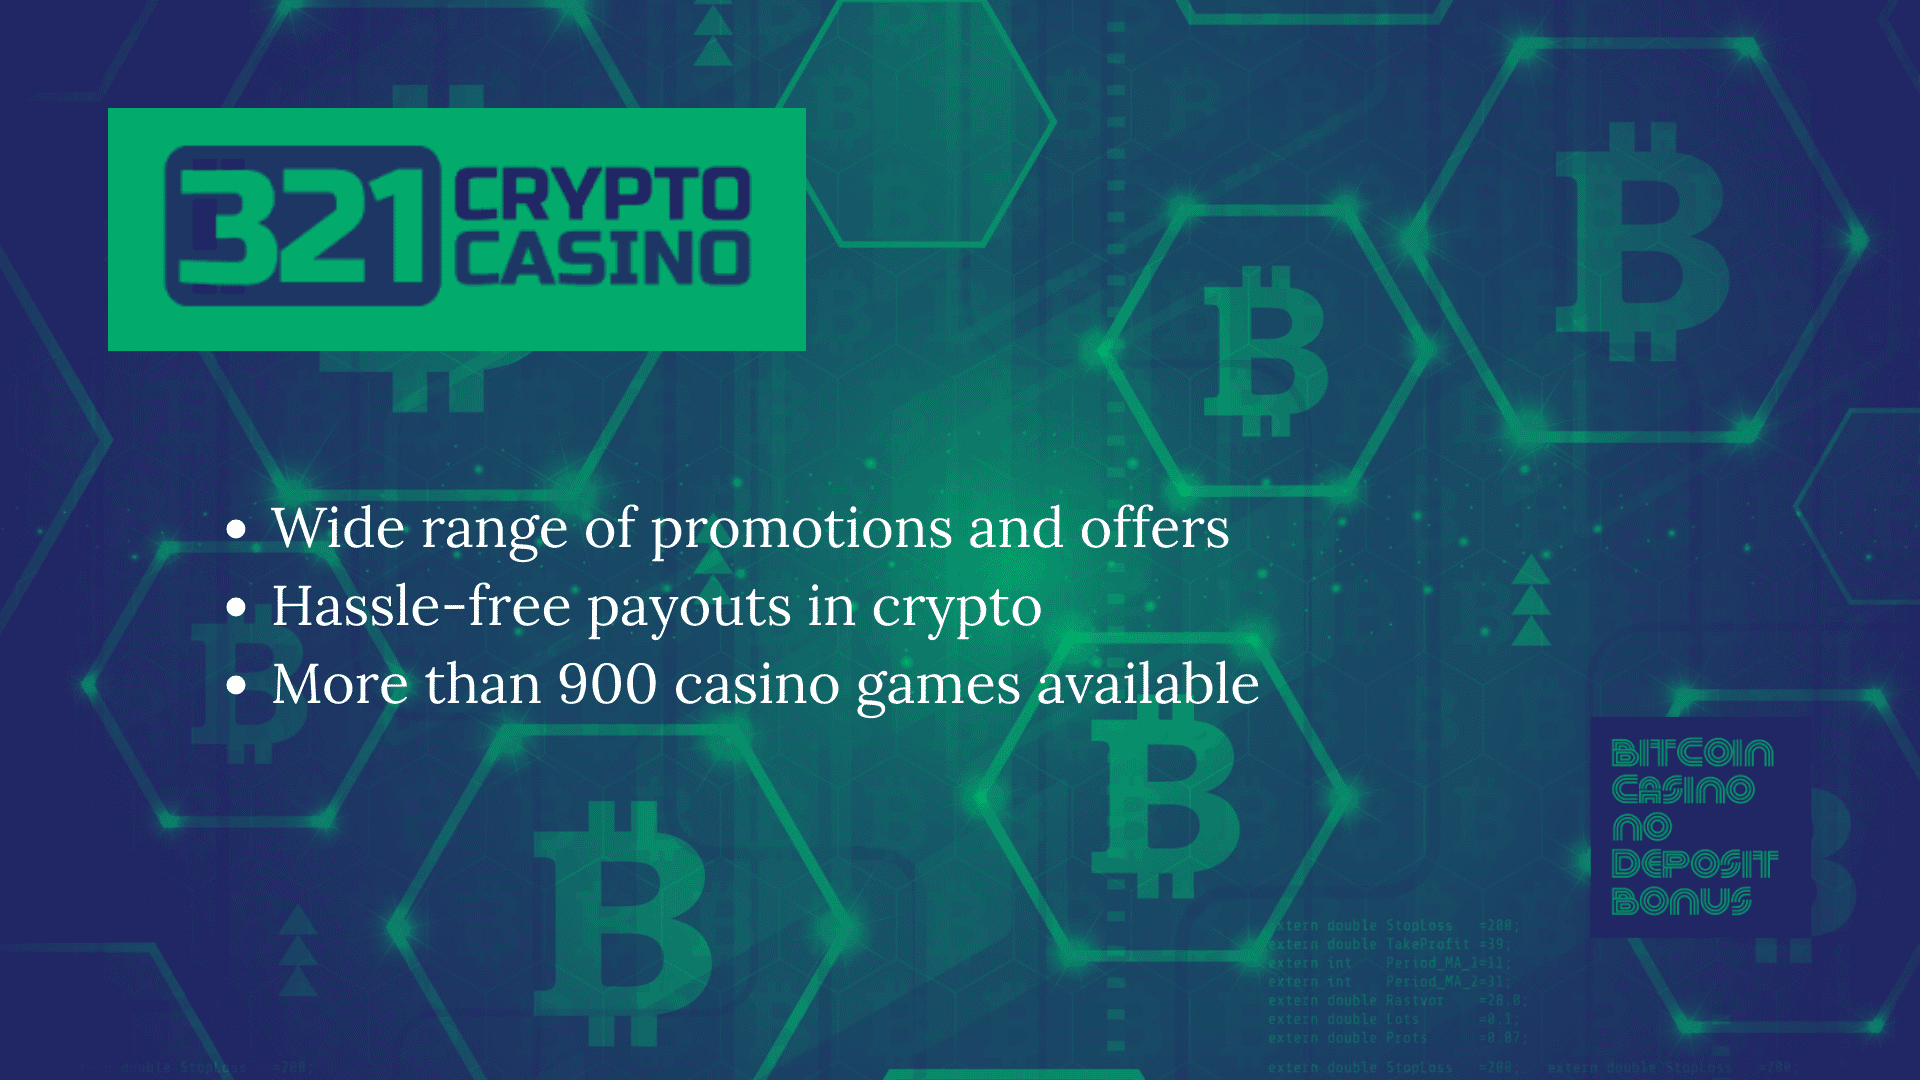 You are currently viewing 321 Crypto Casino Bonus Codes – 321CryptoCasino.com Free Spins December 2022